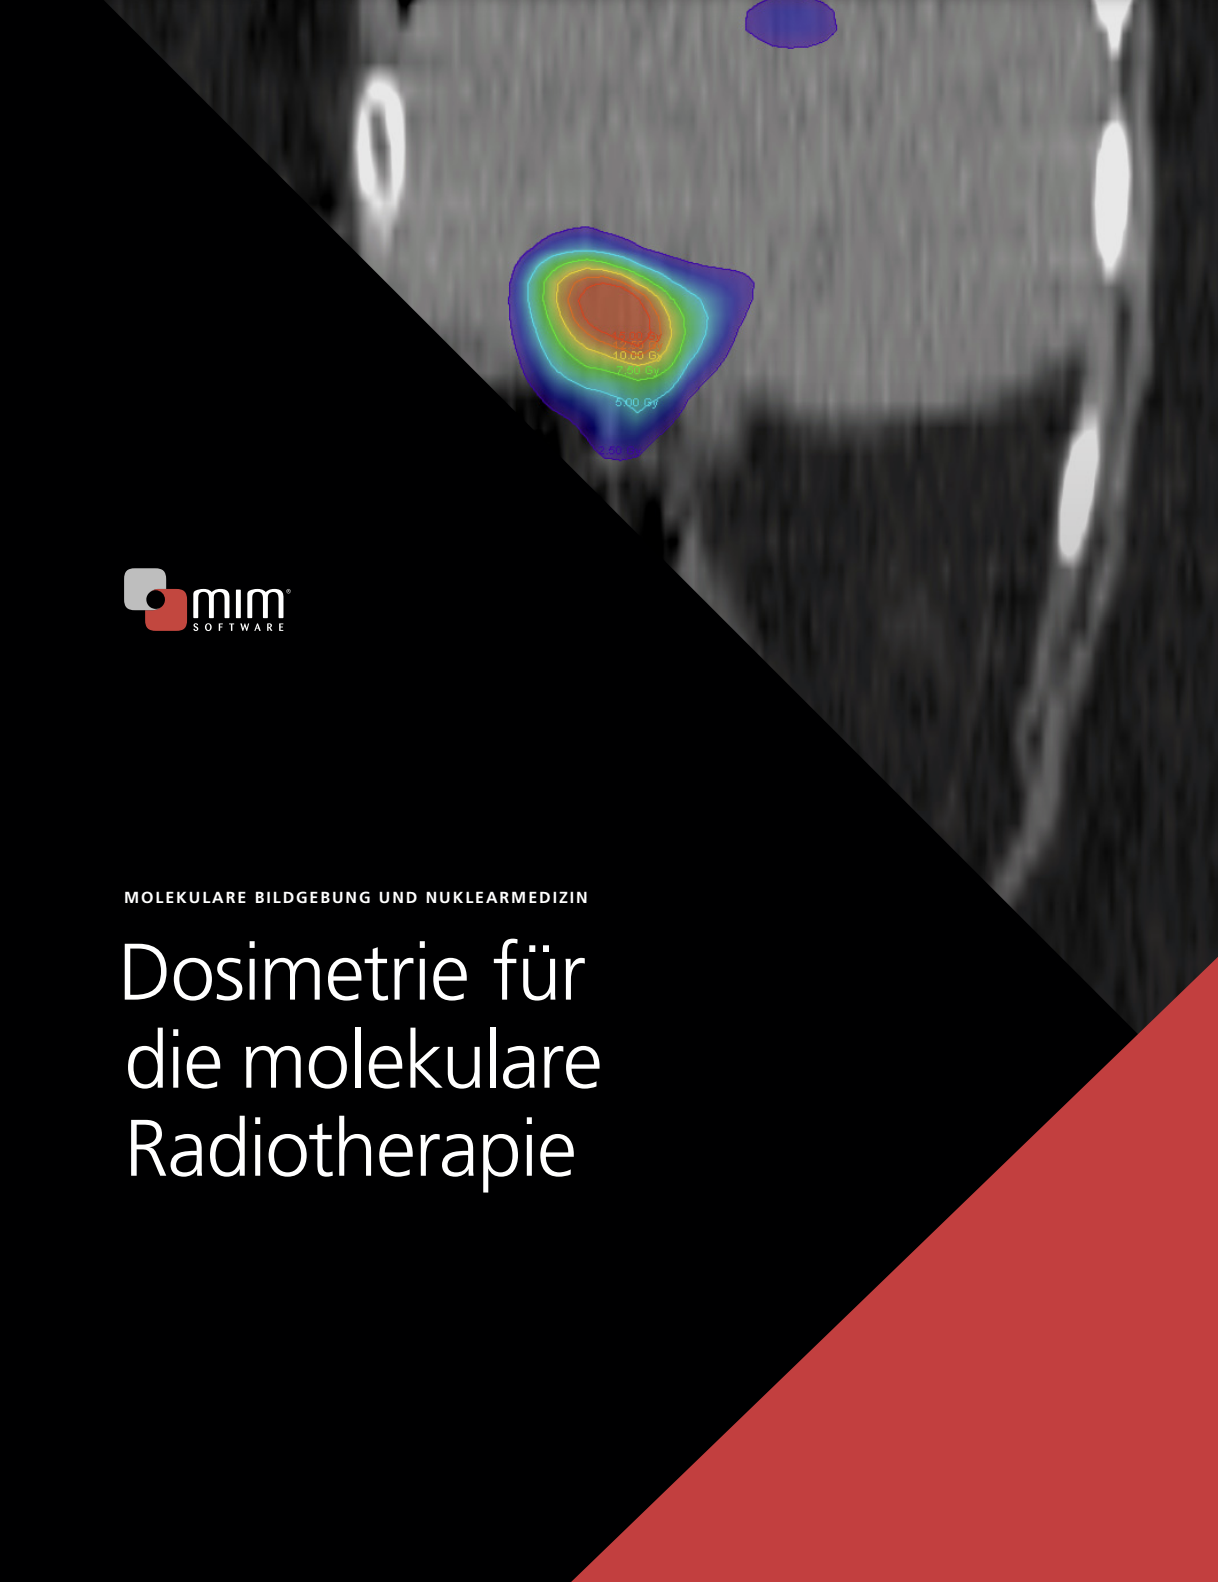 Molekulare Bildgebung Und Nuklearmedizin – Dosimetrie Für Die Molekulare Radiotherapie (PDF)